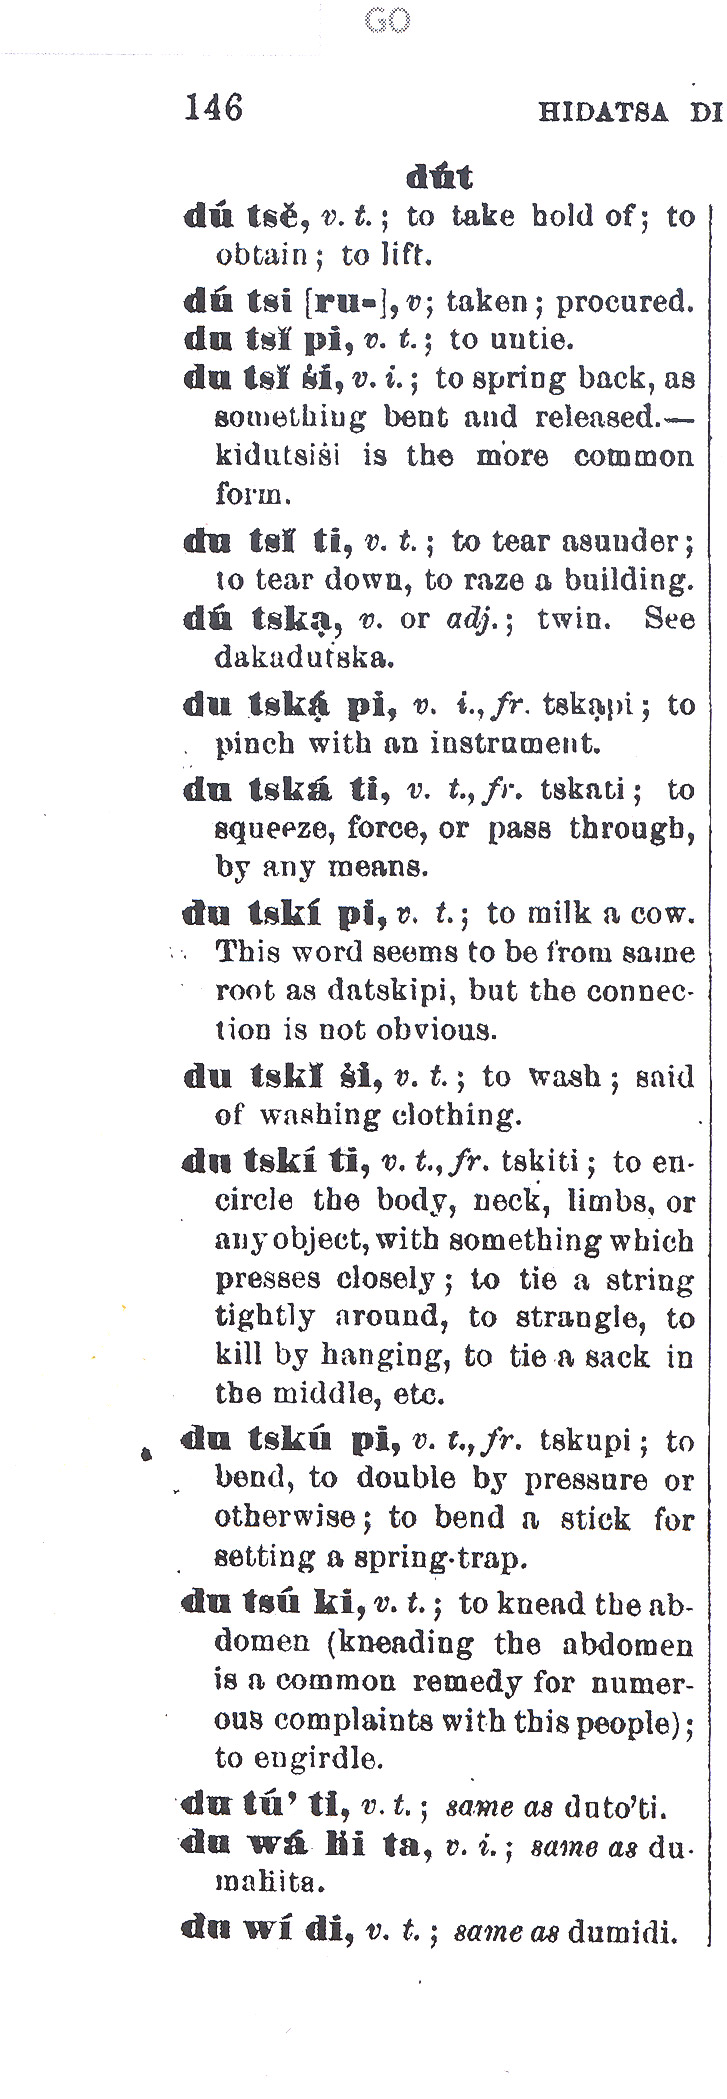 Hidatsa Dictionary